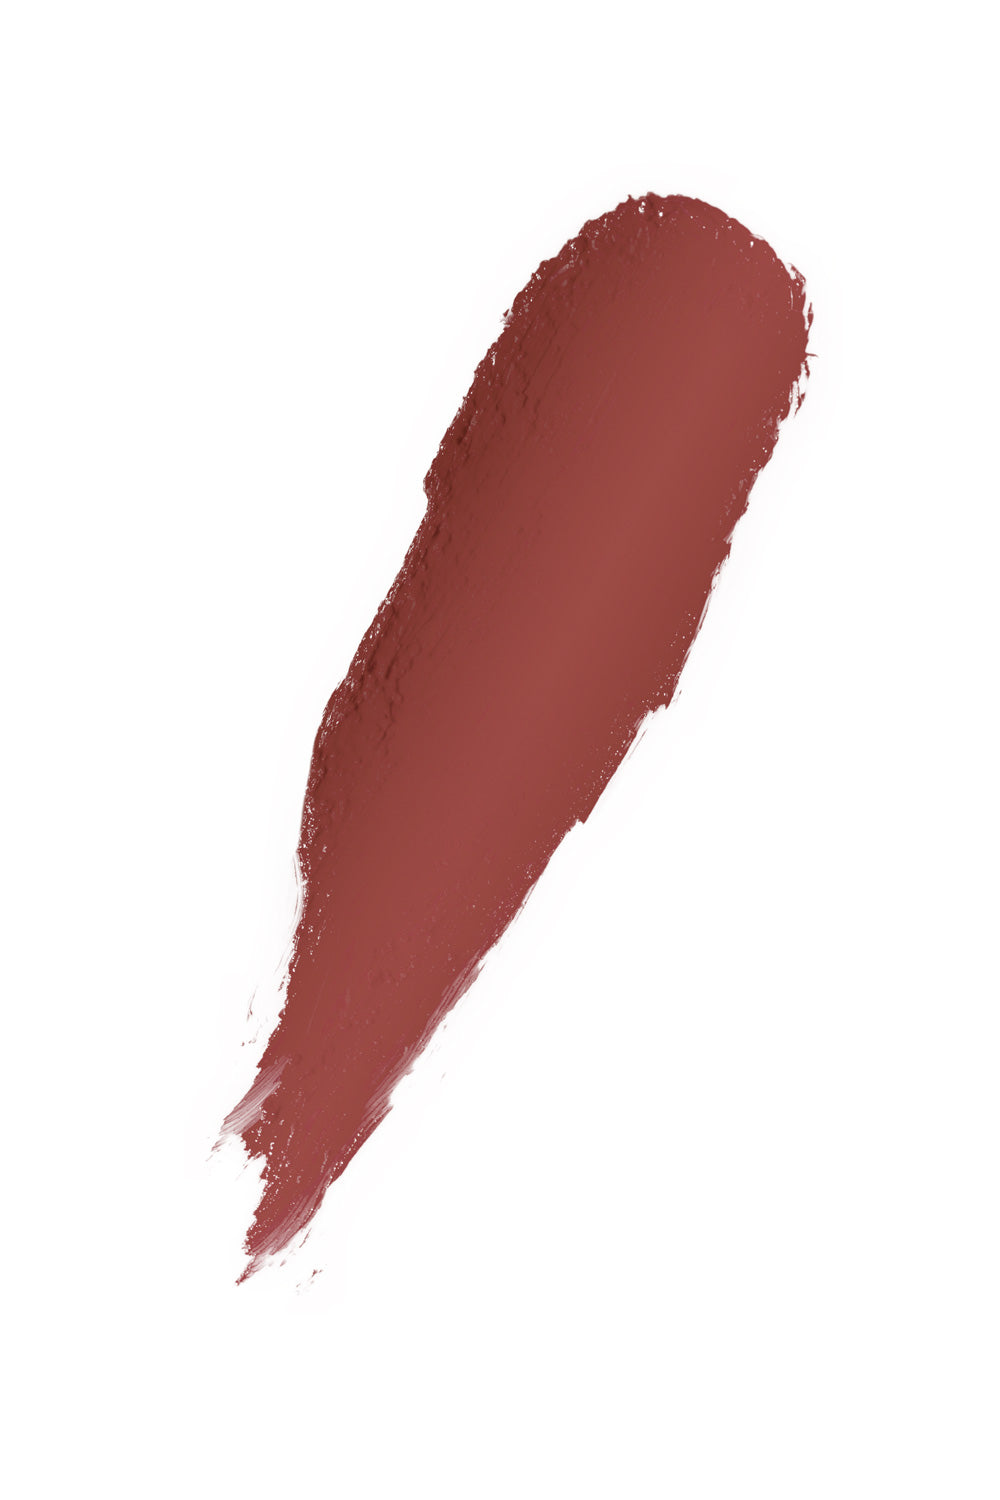 Dune Rose - Lipstick